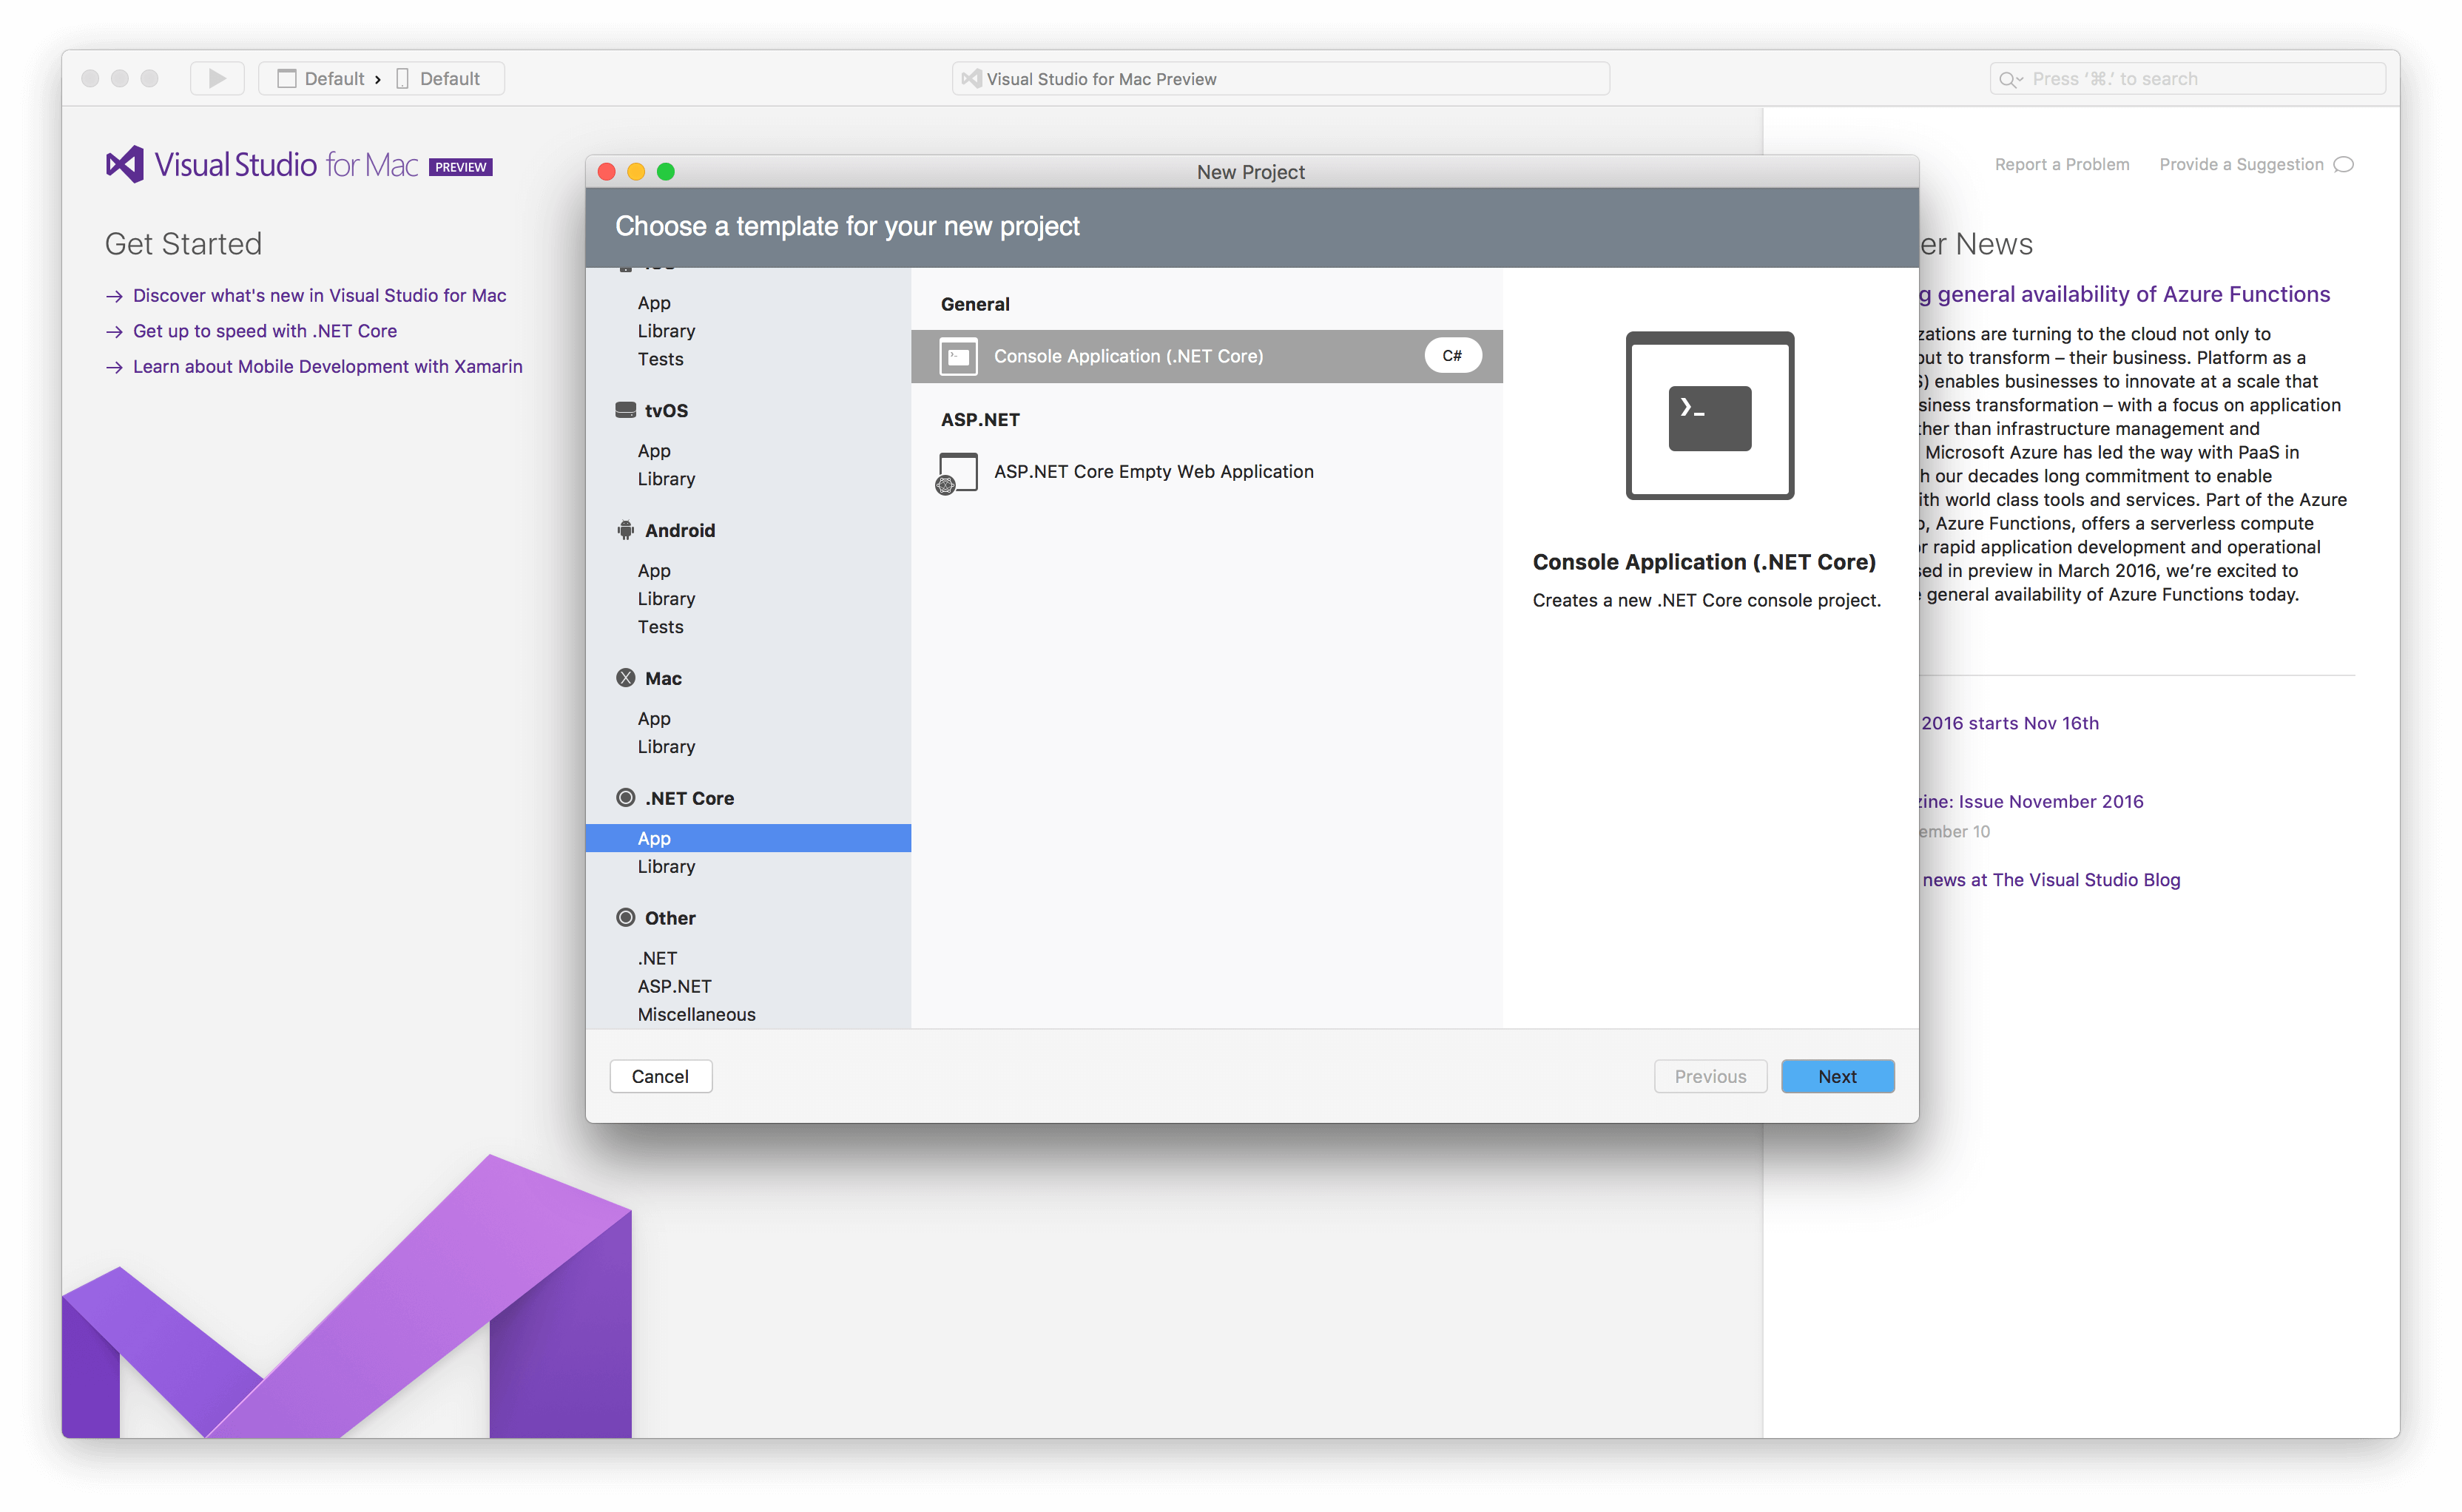 what makese sense for xamarin development - windows or mac?